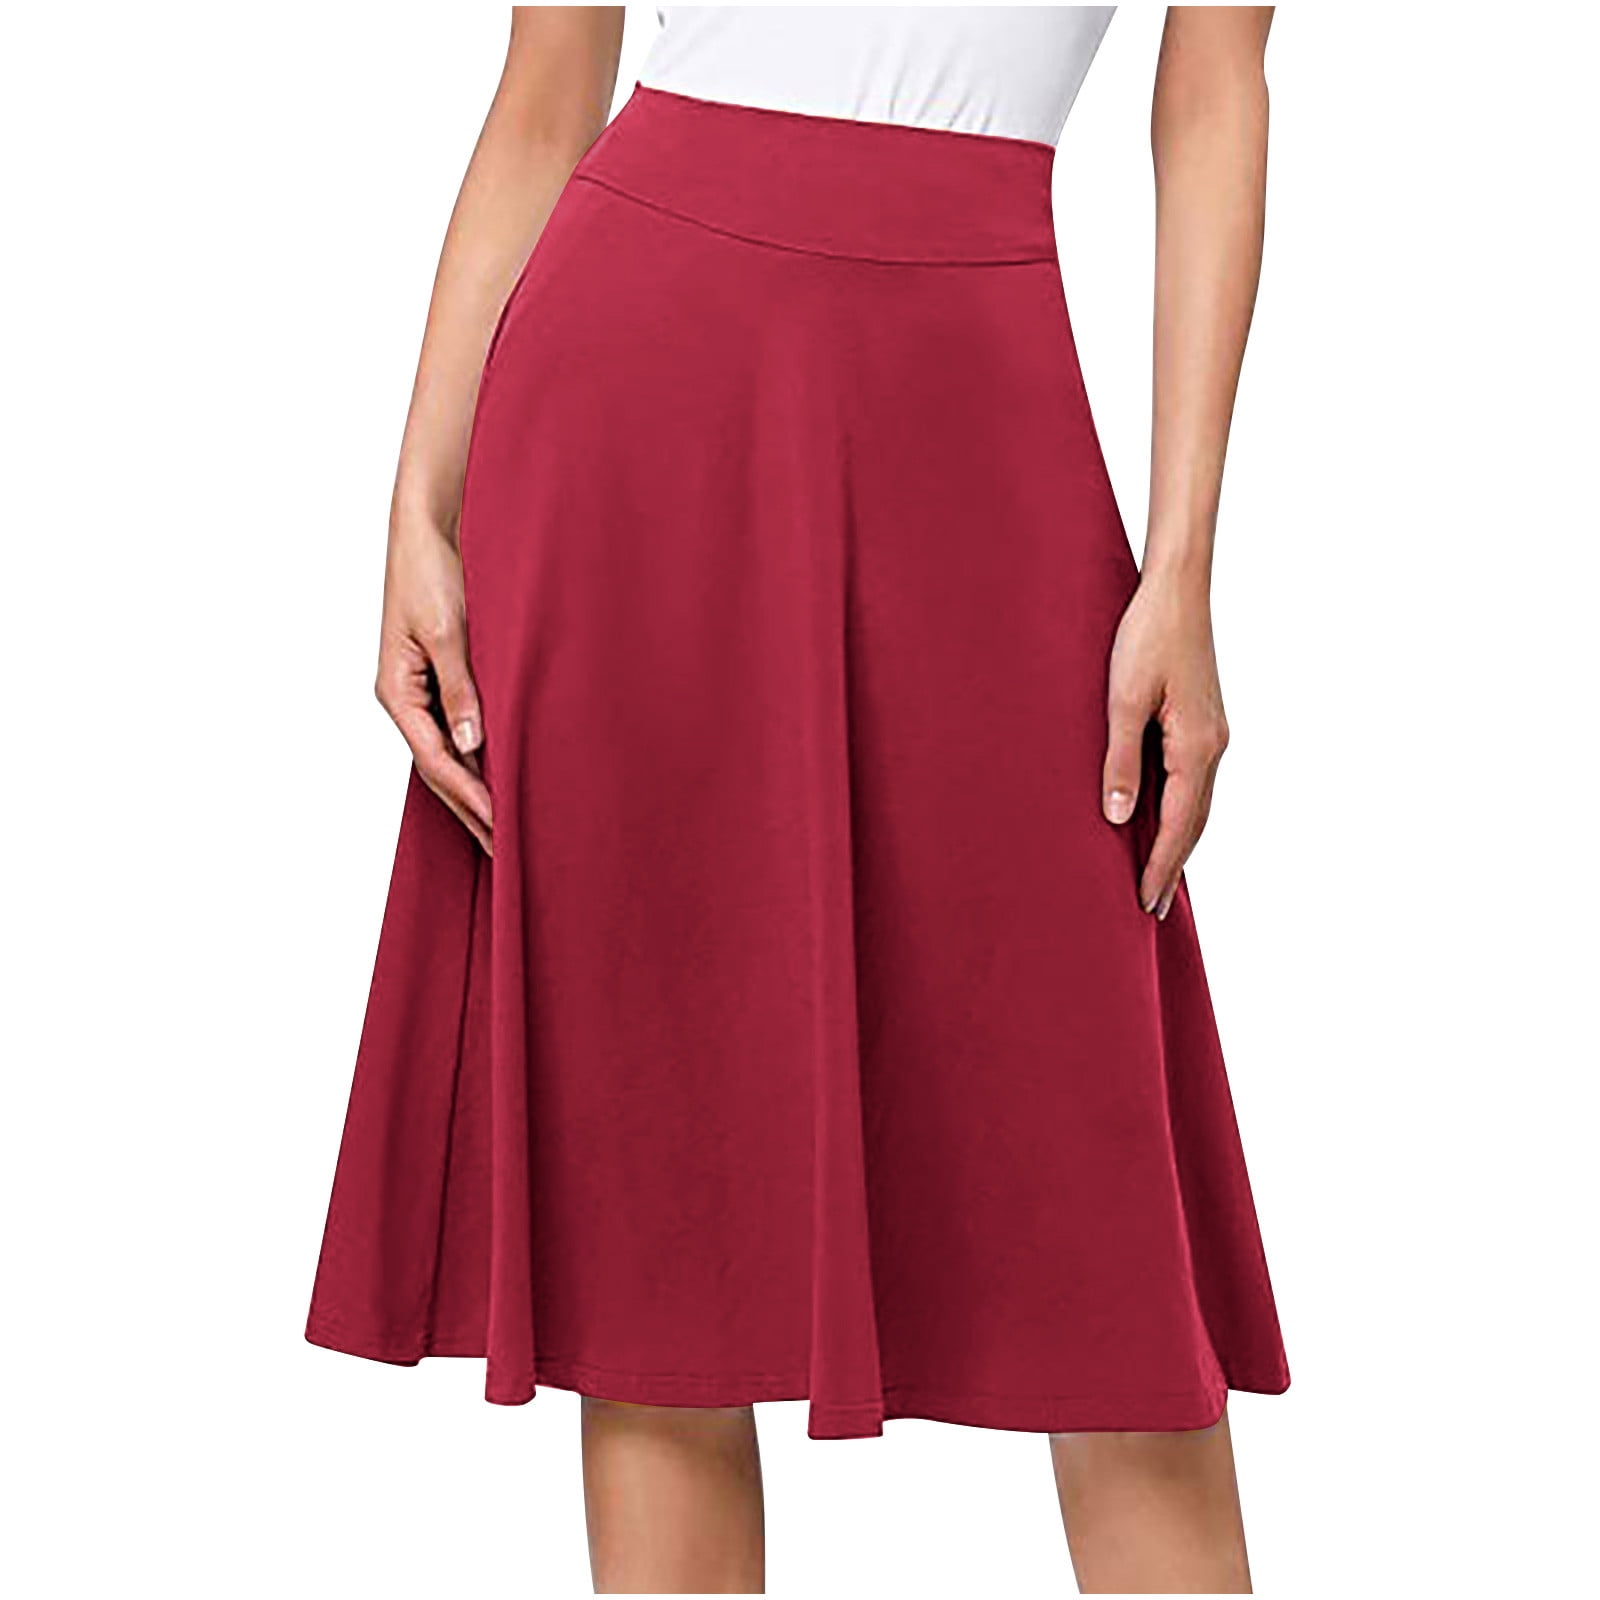 Women Sexy Mini Skirt Set Sleeveless Strapless Crop Cami Tube Top